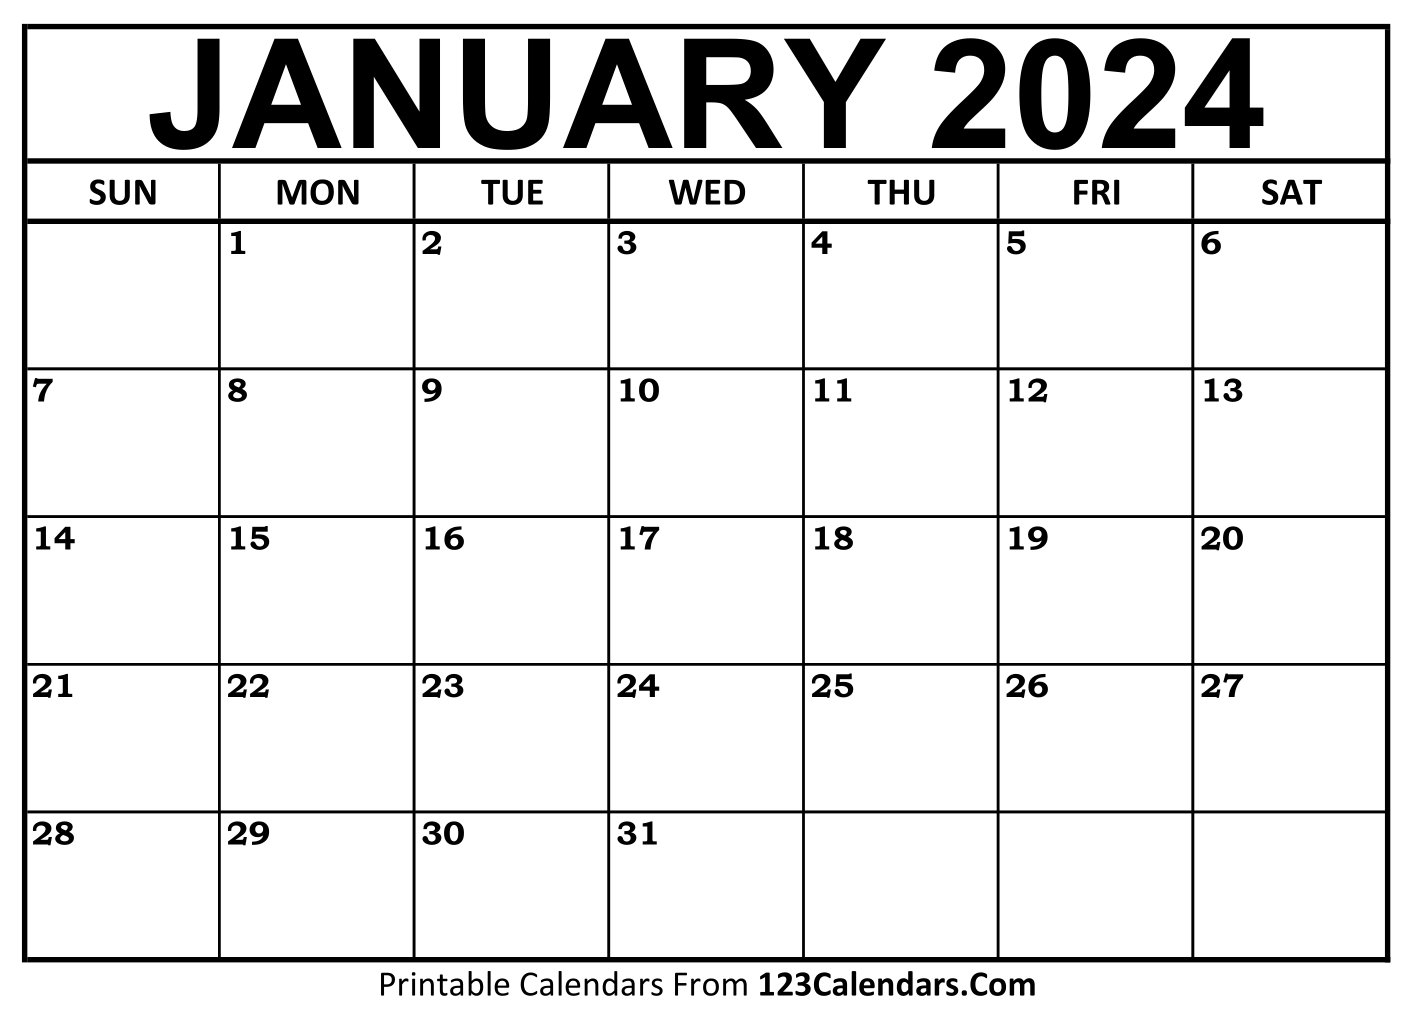 Printable January 2024 Calendar Templates - 123Calendars for January 2024 Blank Printable Calendar